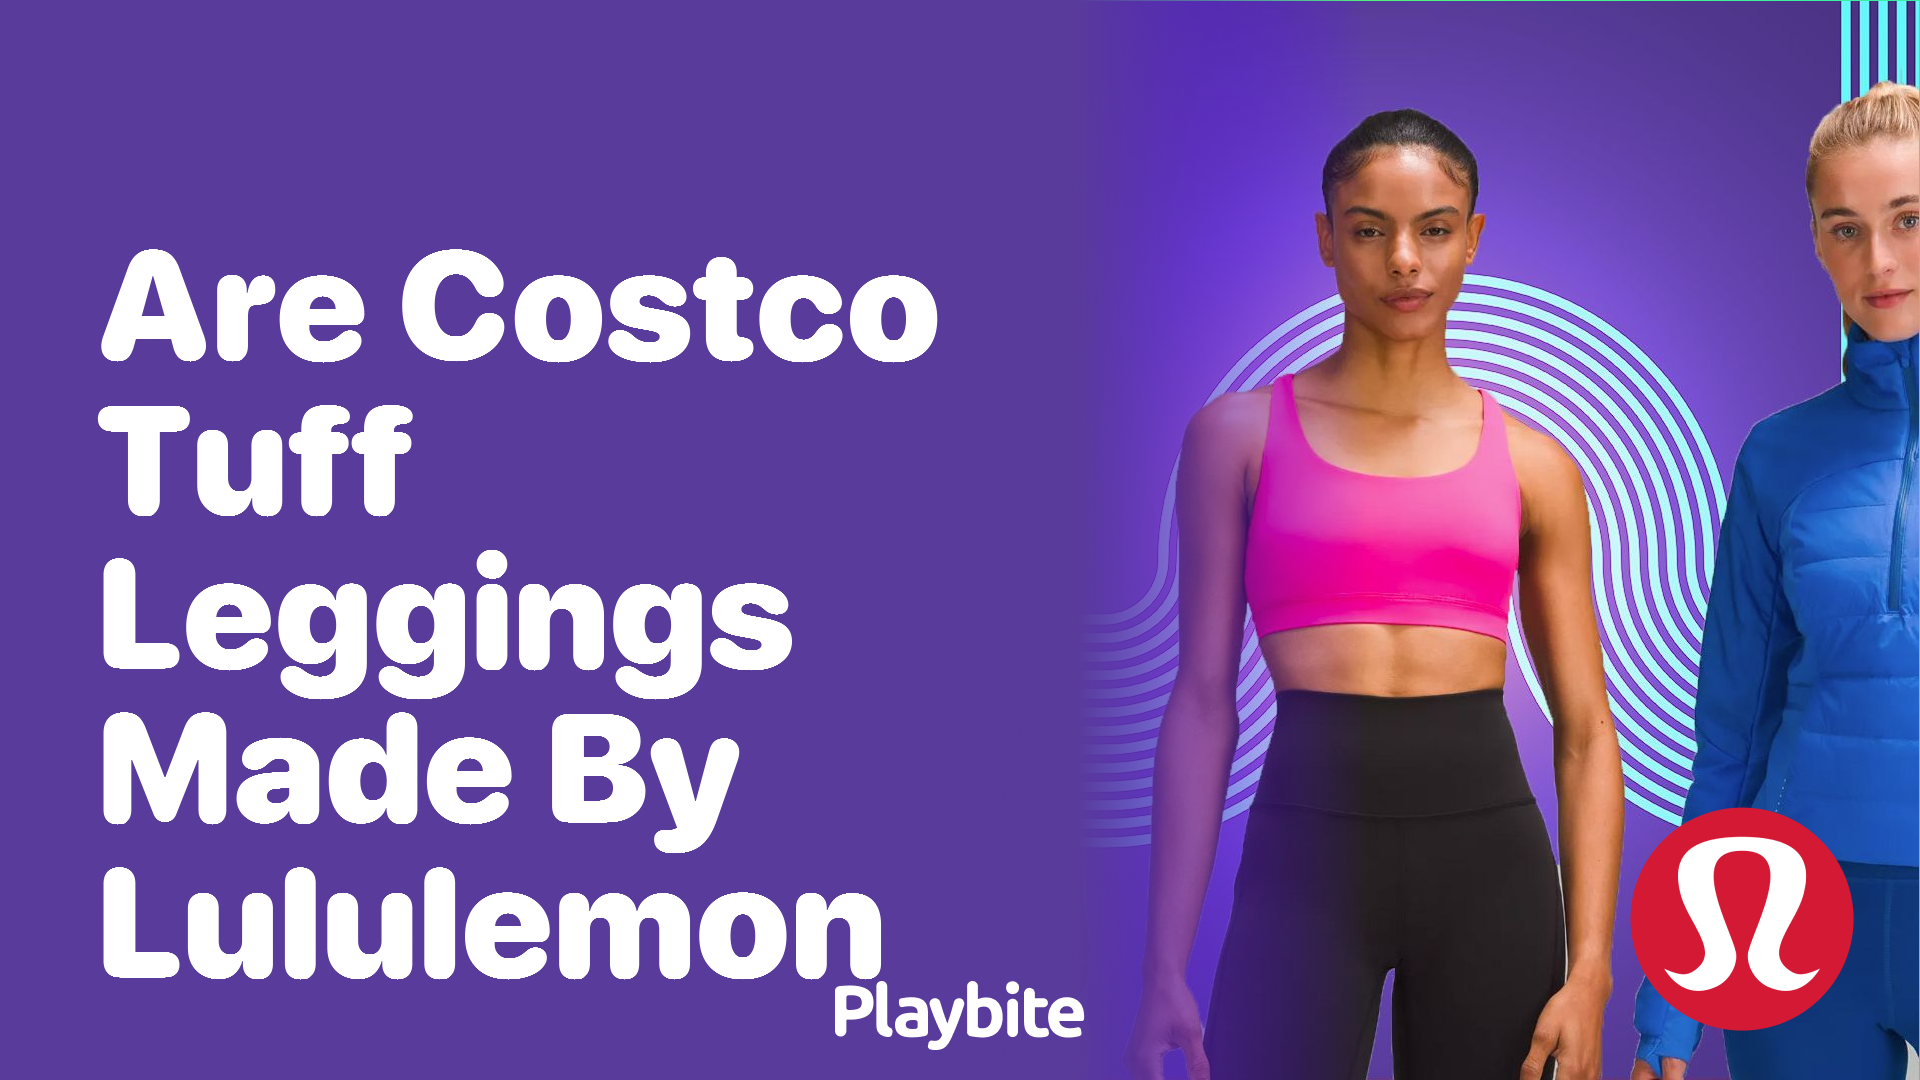 Are Costco Leggings the Same as Lululemon? - Playbite